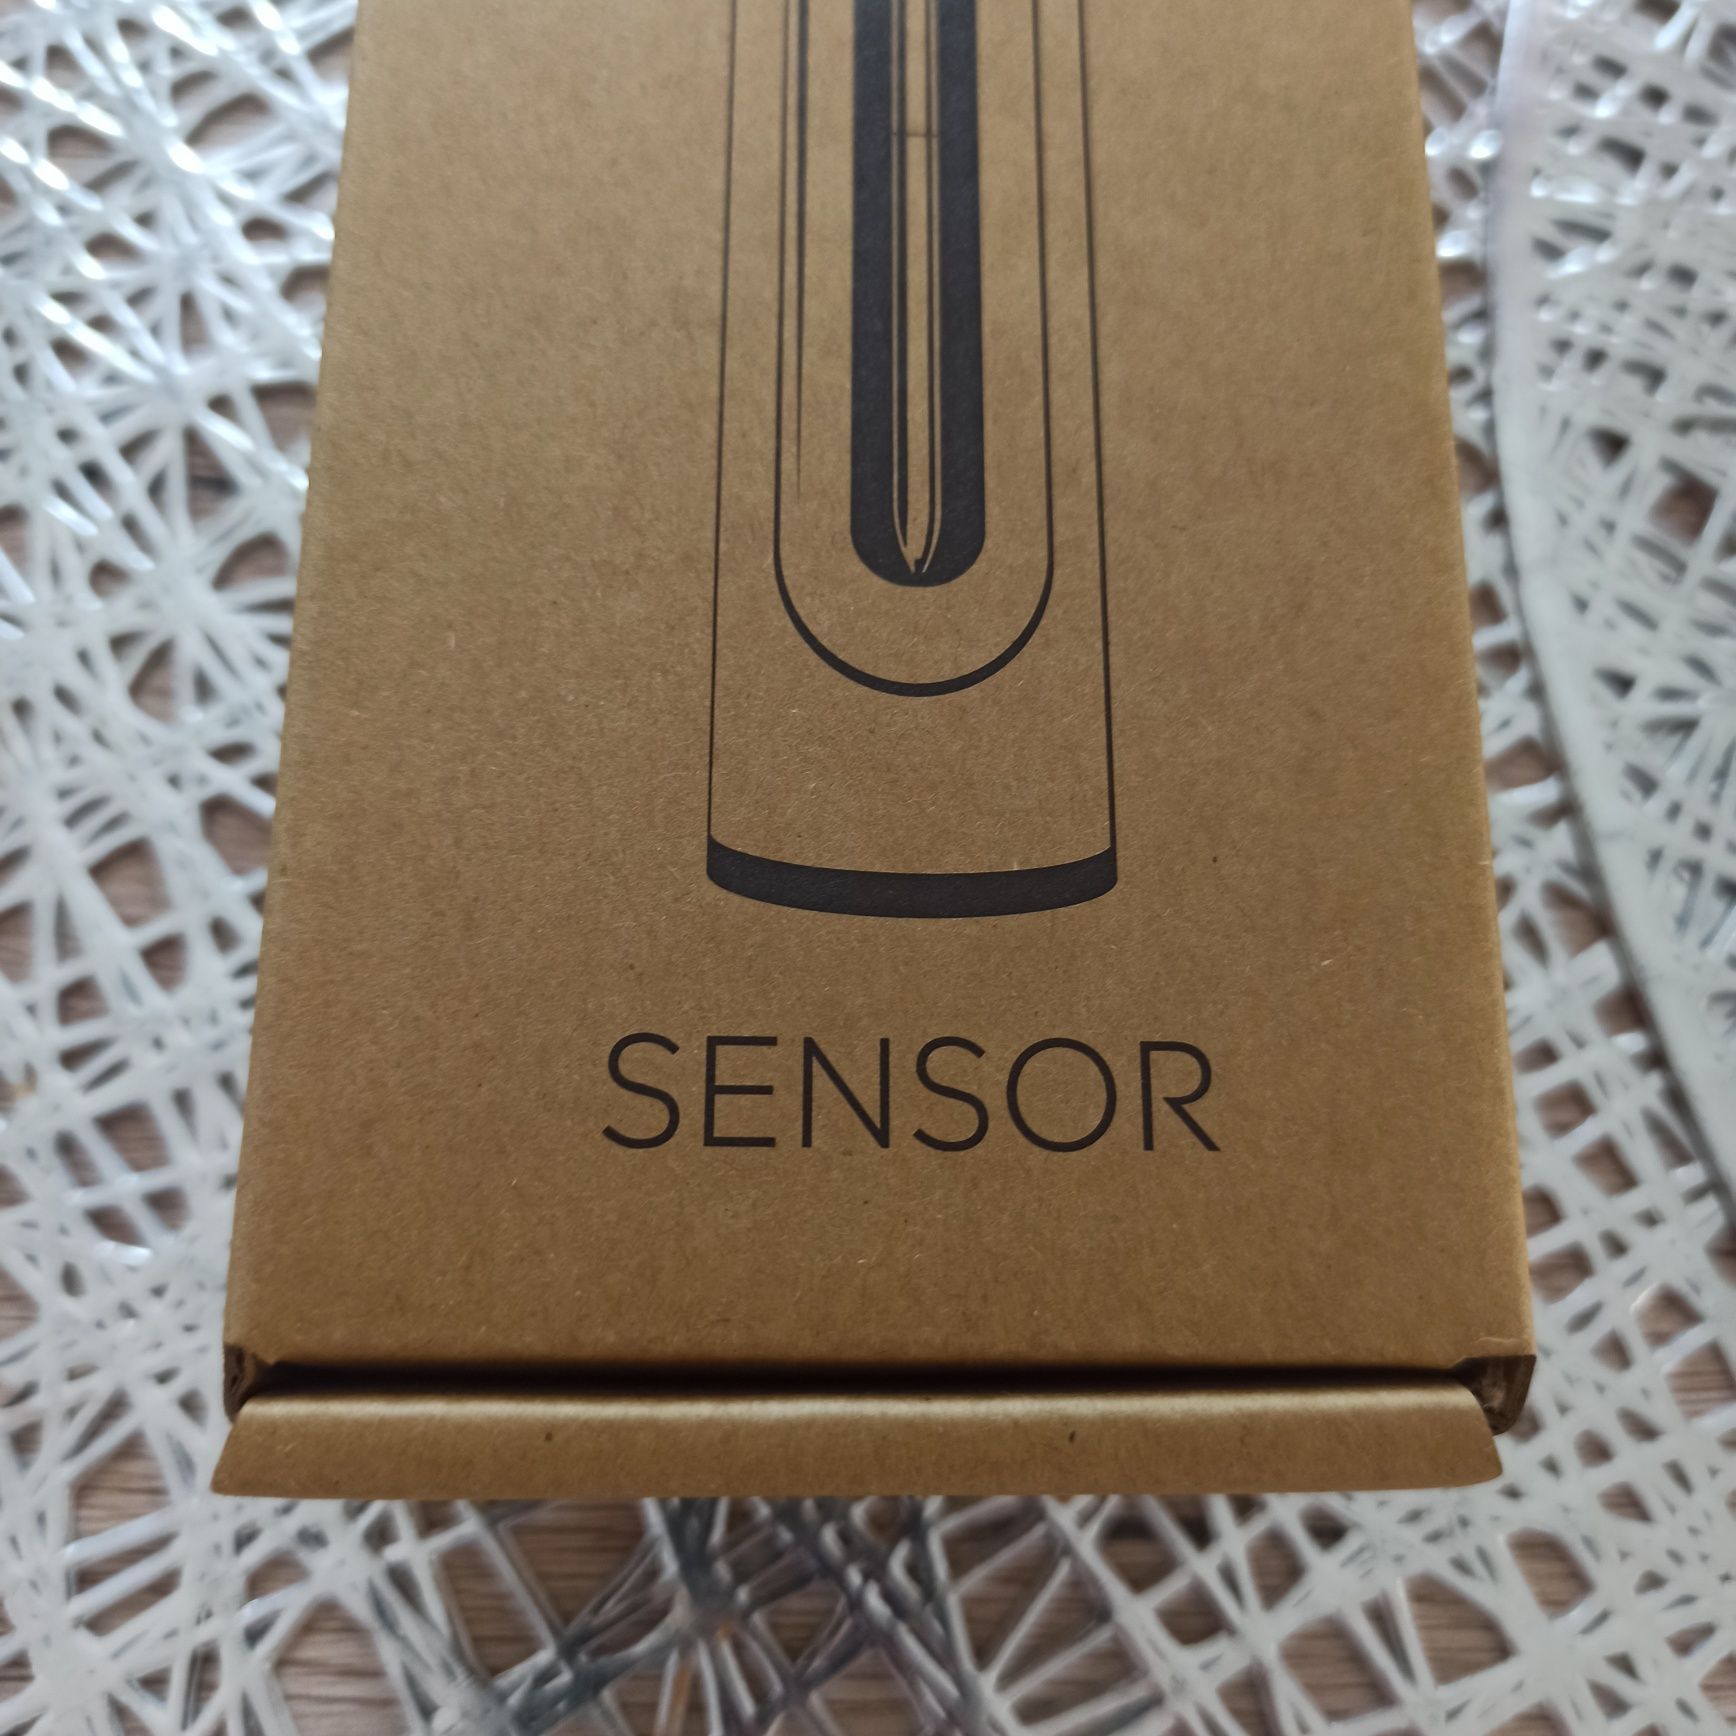 Sensor Thermomix TM